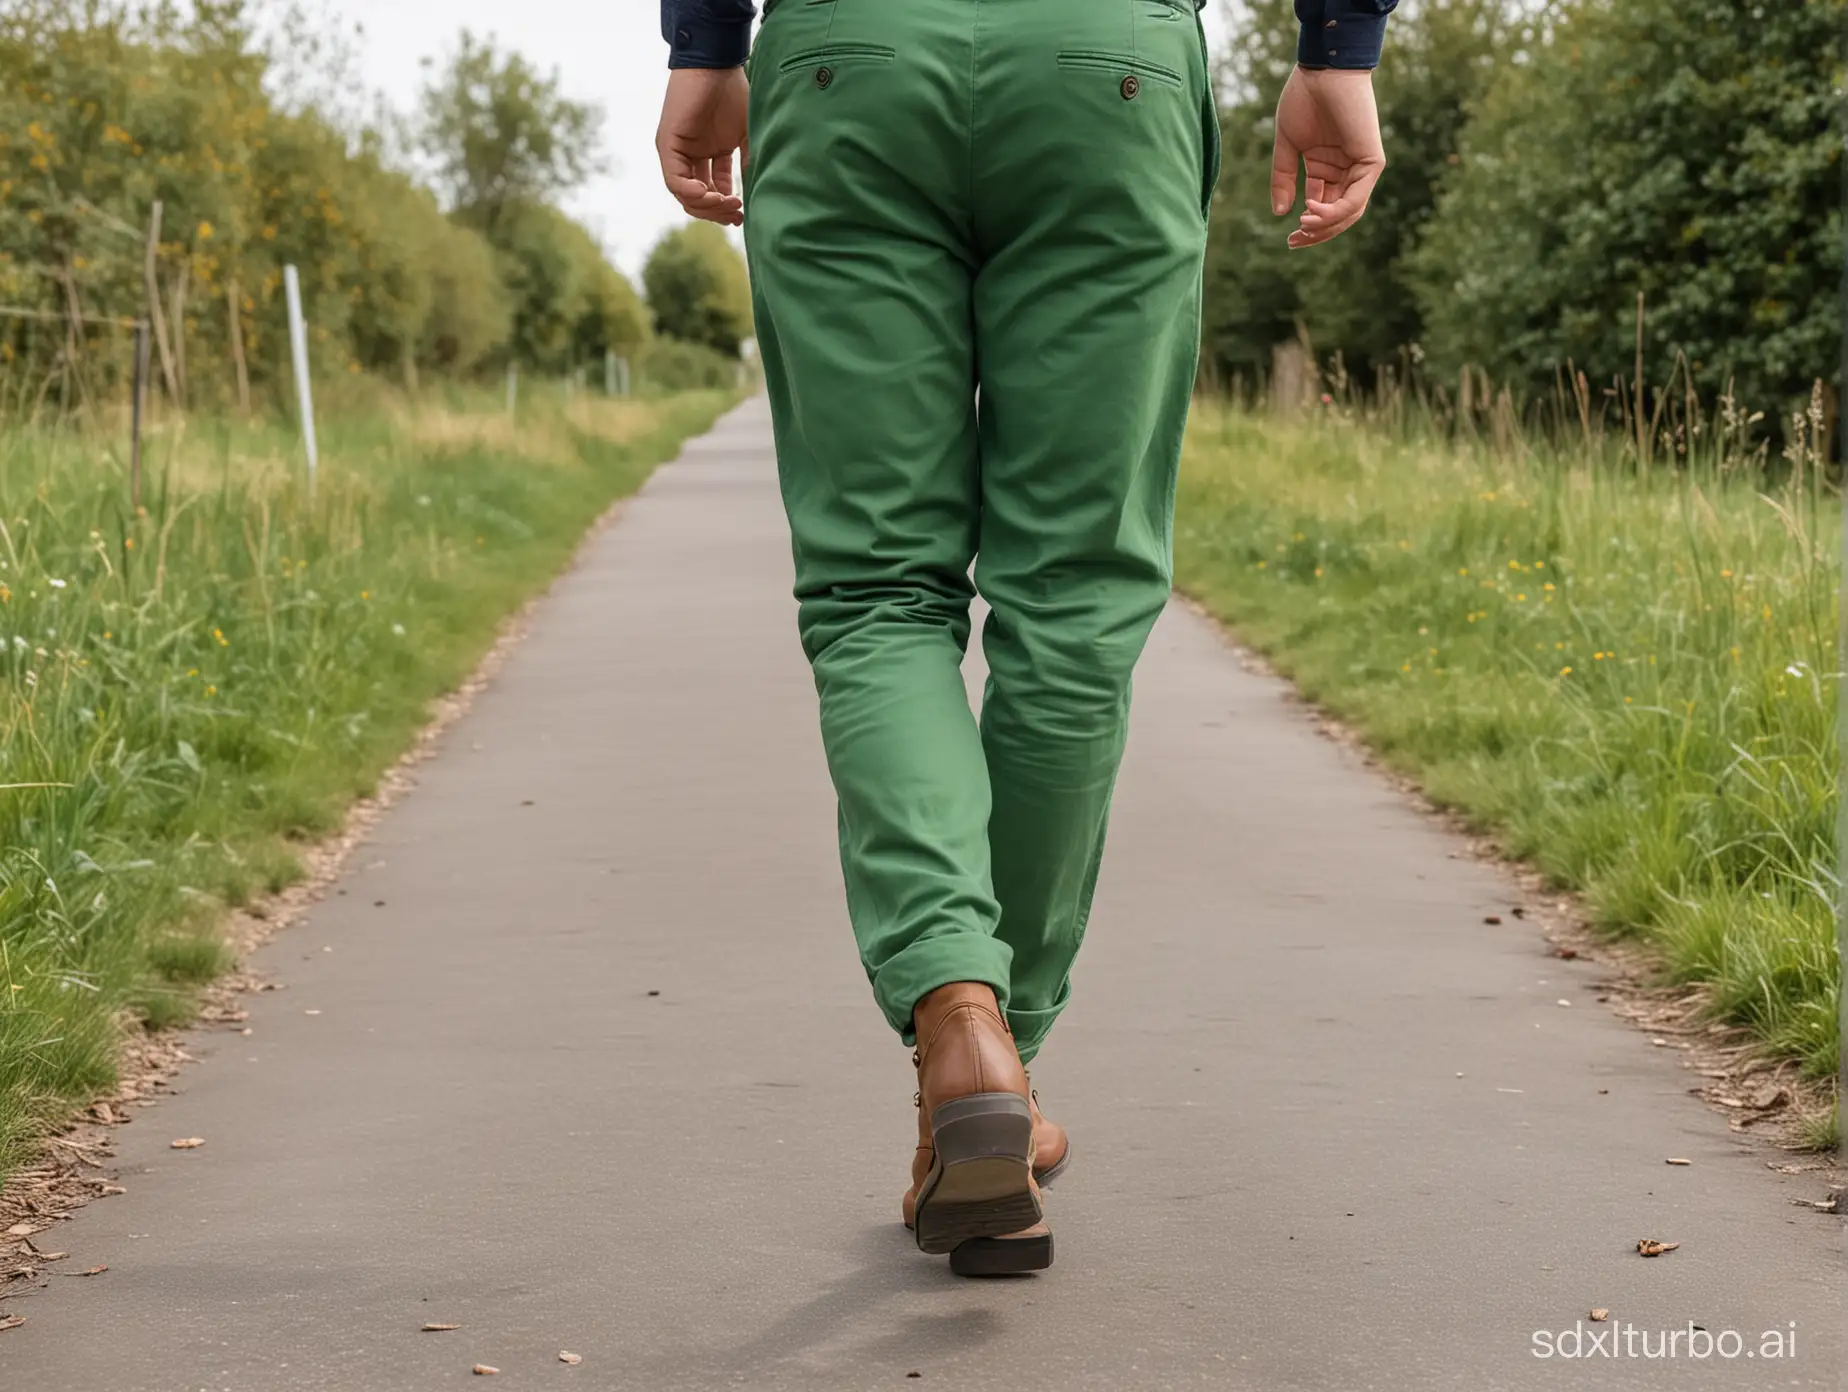 Legs wearing green trousers walking from behind